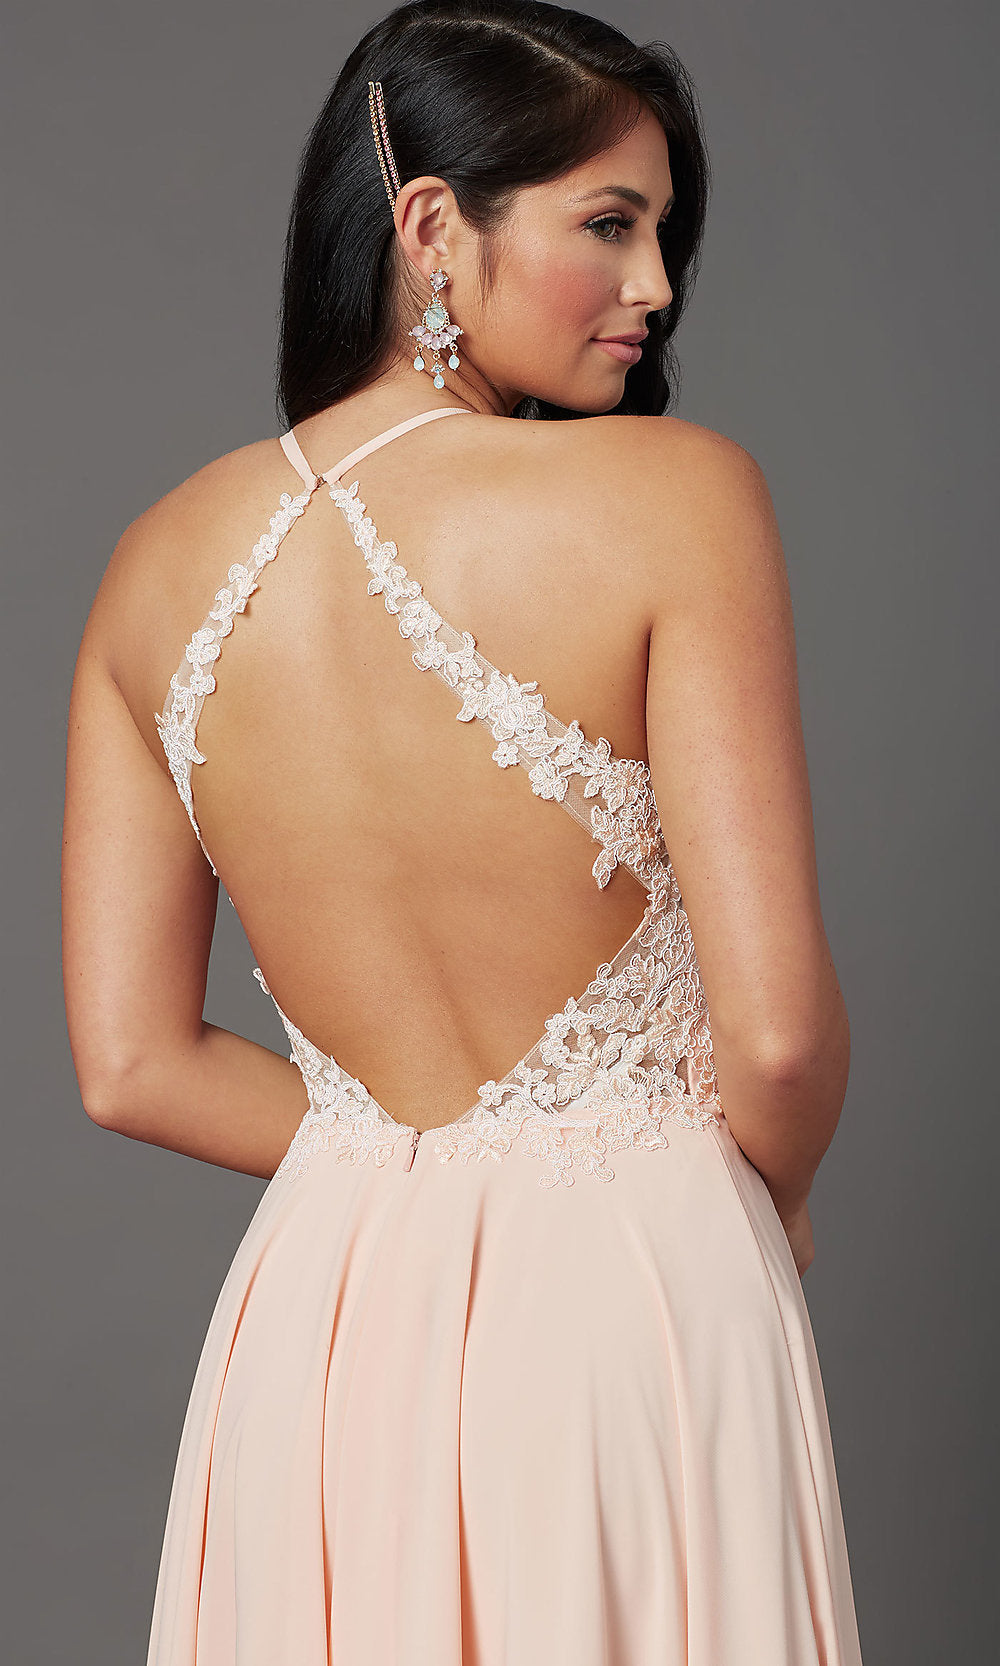  Open-Back Long Prom Dress by PromGirl